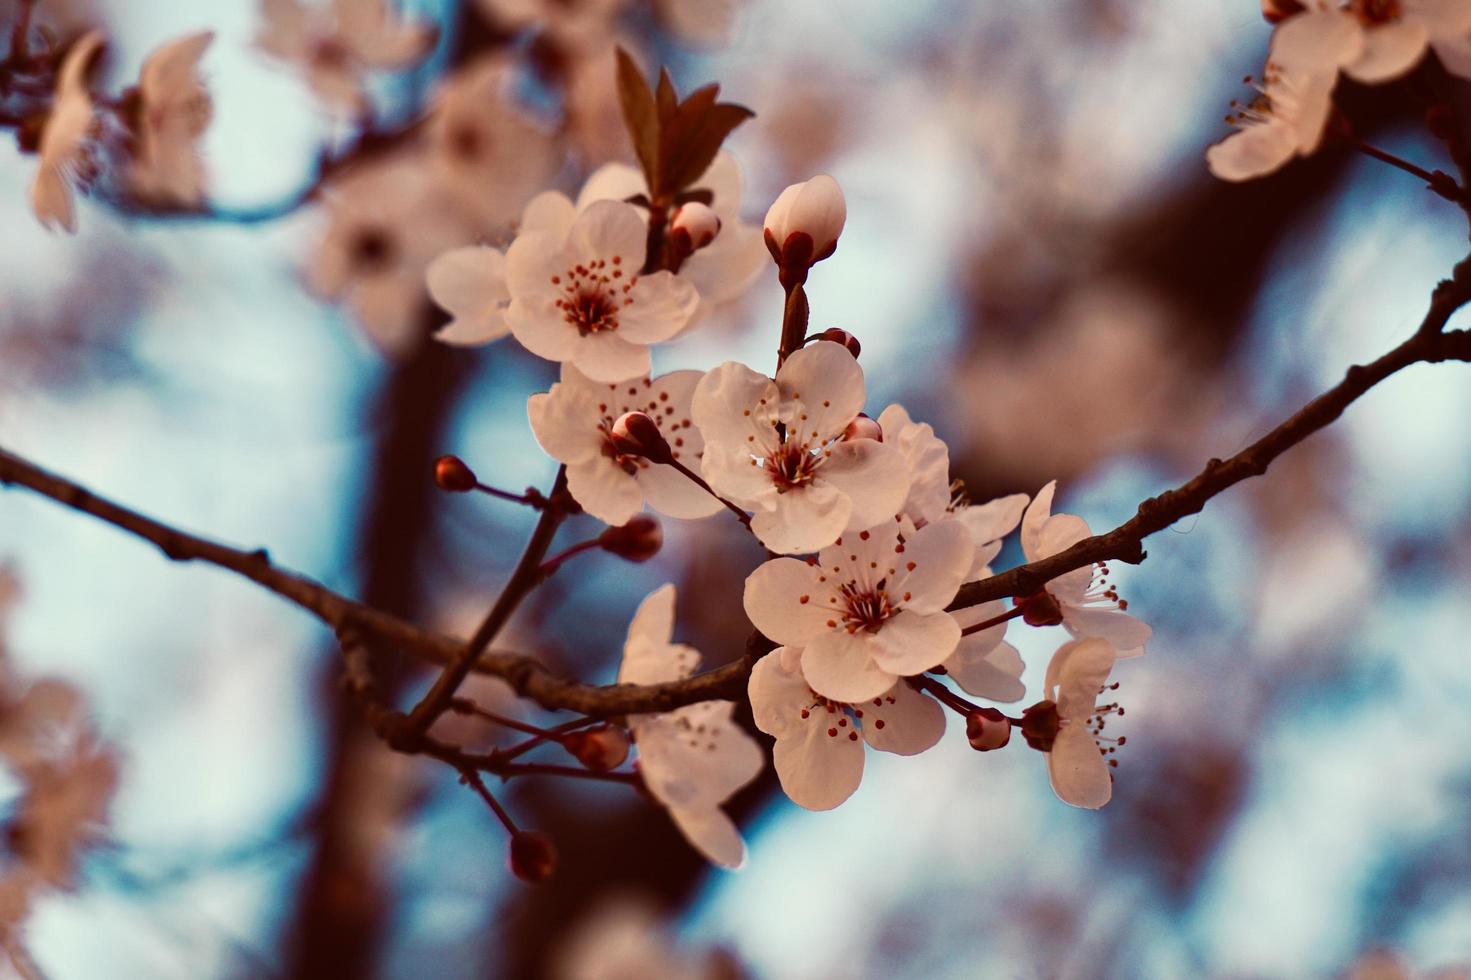 Cherry blossom sakura flower in the spring season photo